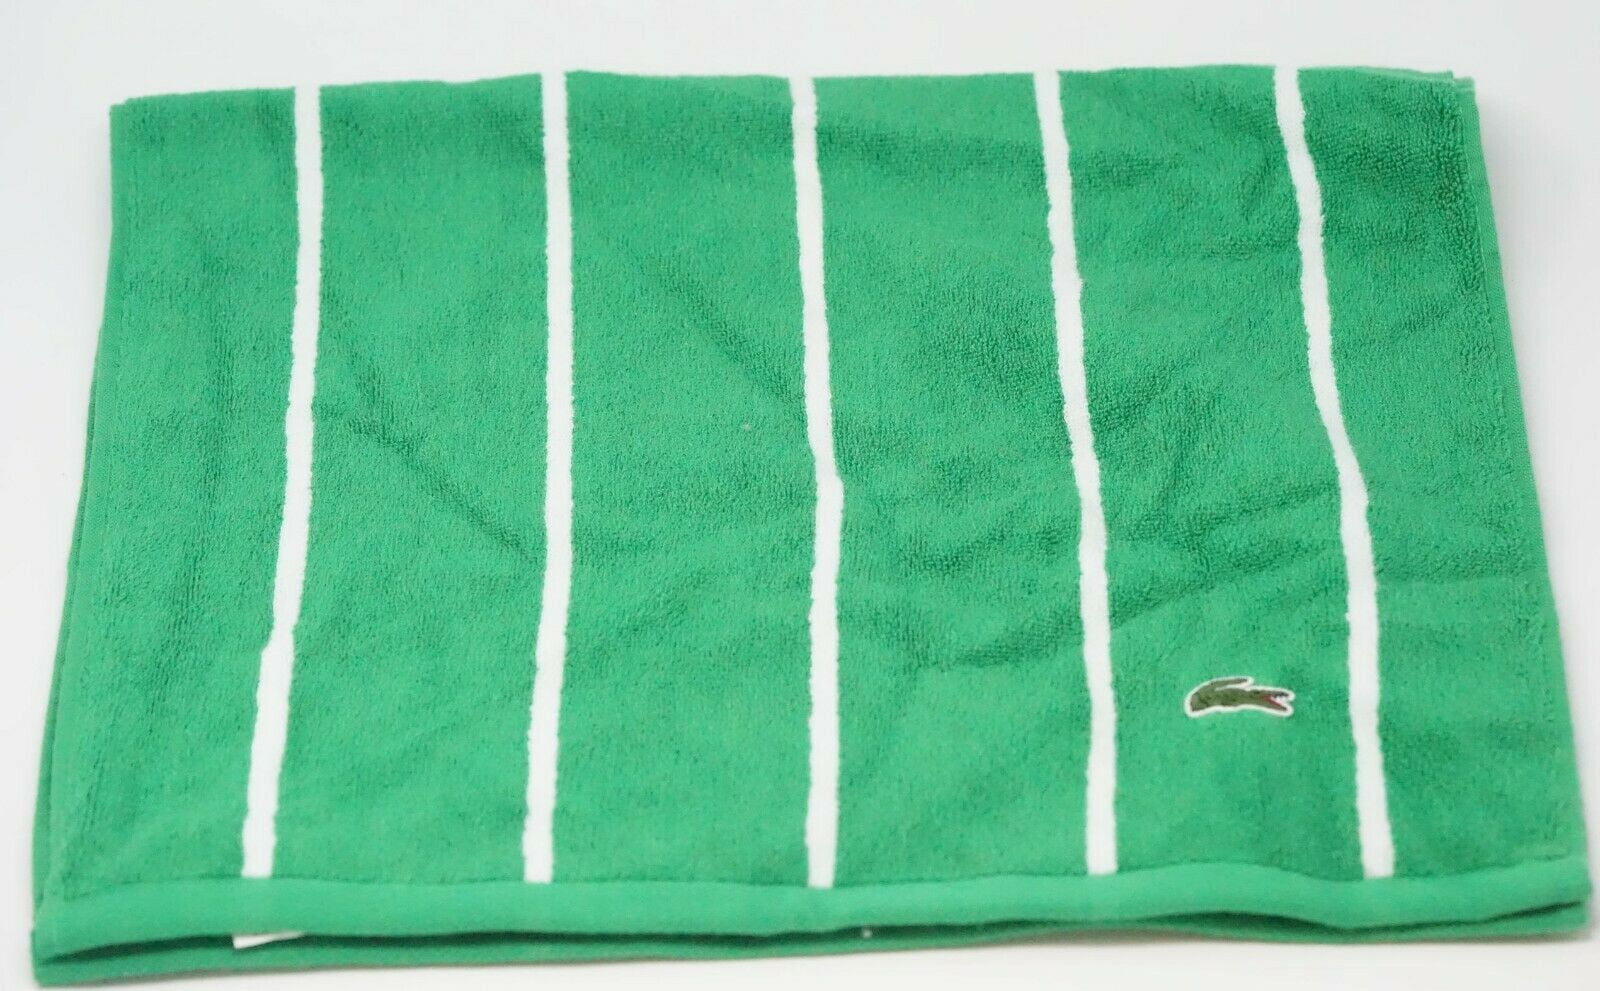 Lacoste Luxury Soft Cotton Hand and Bath Large Towel Set Blue Stripe